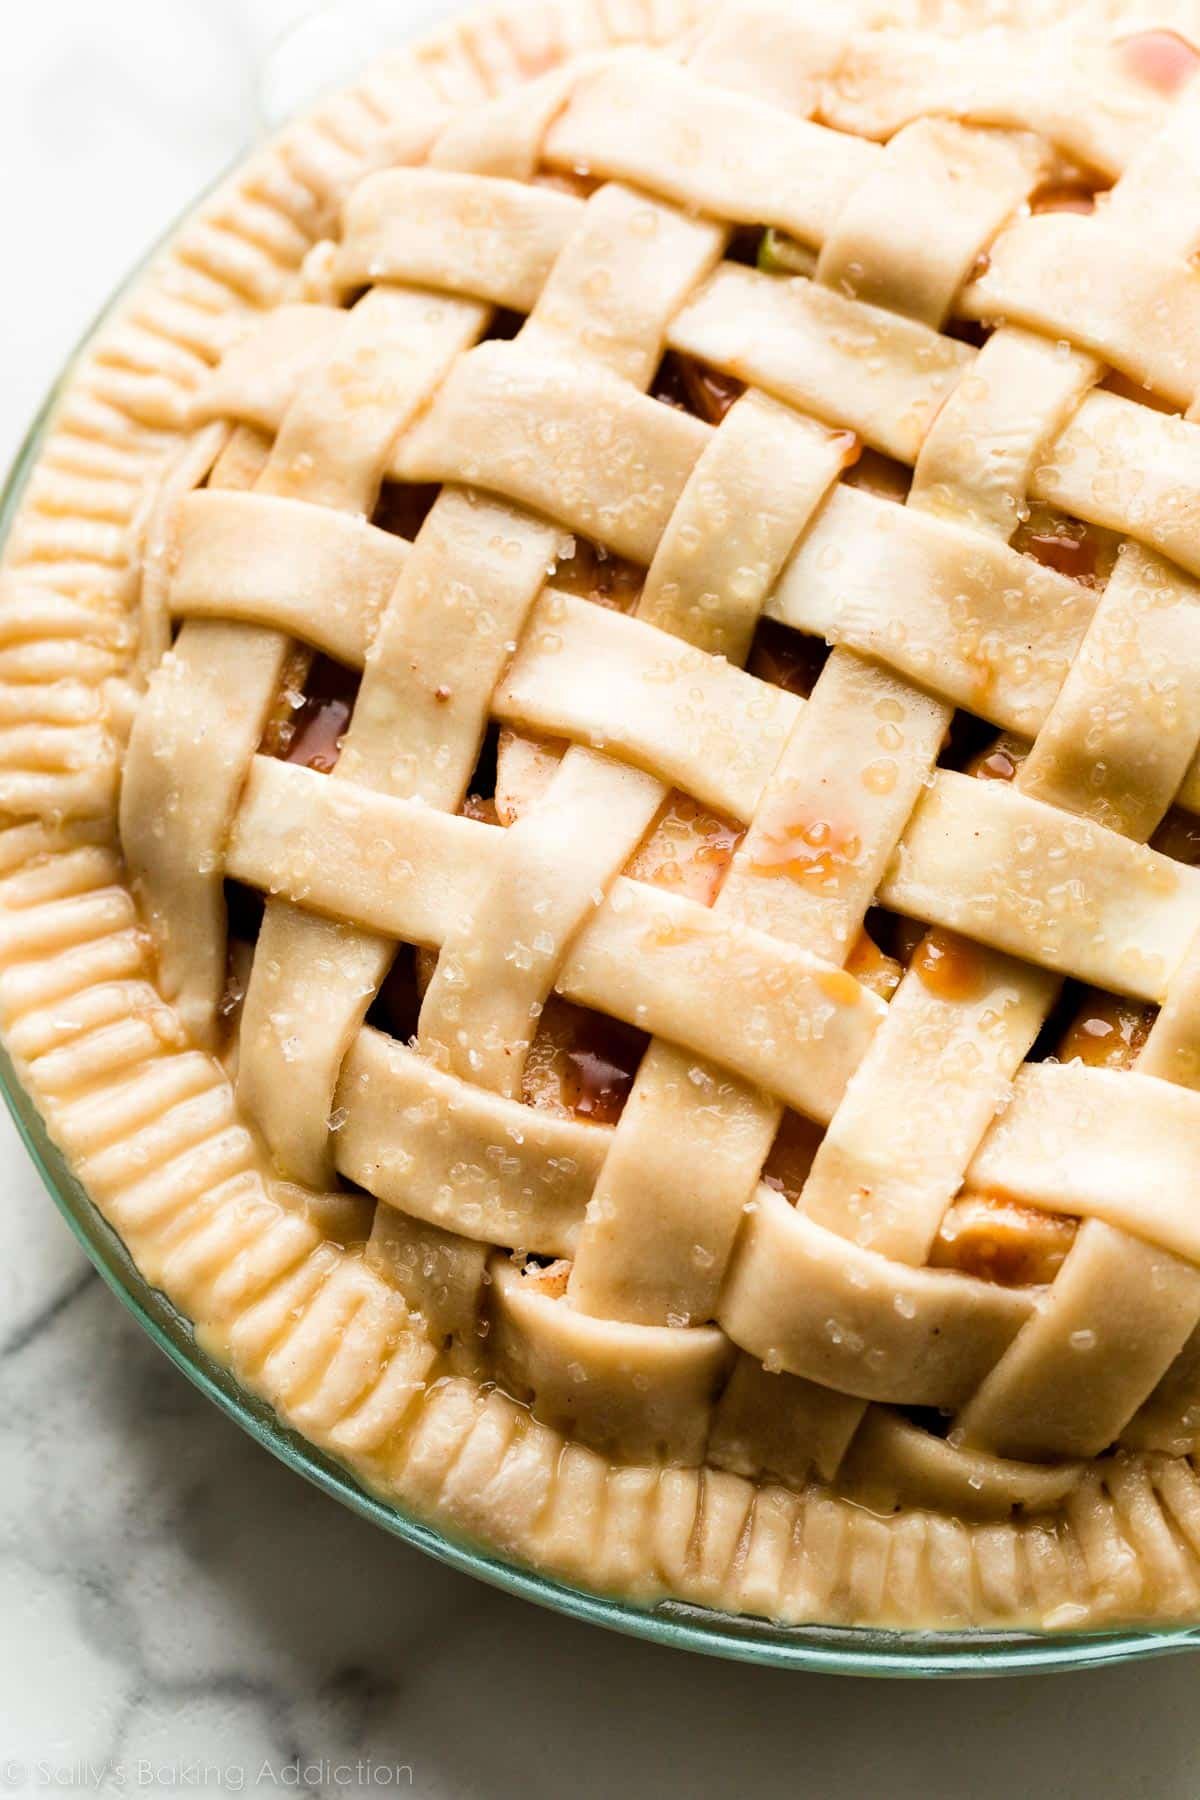 unbaked pie with lattice pie crust and crimped edge.